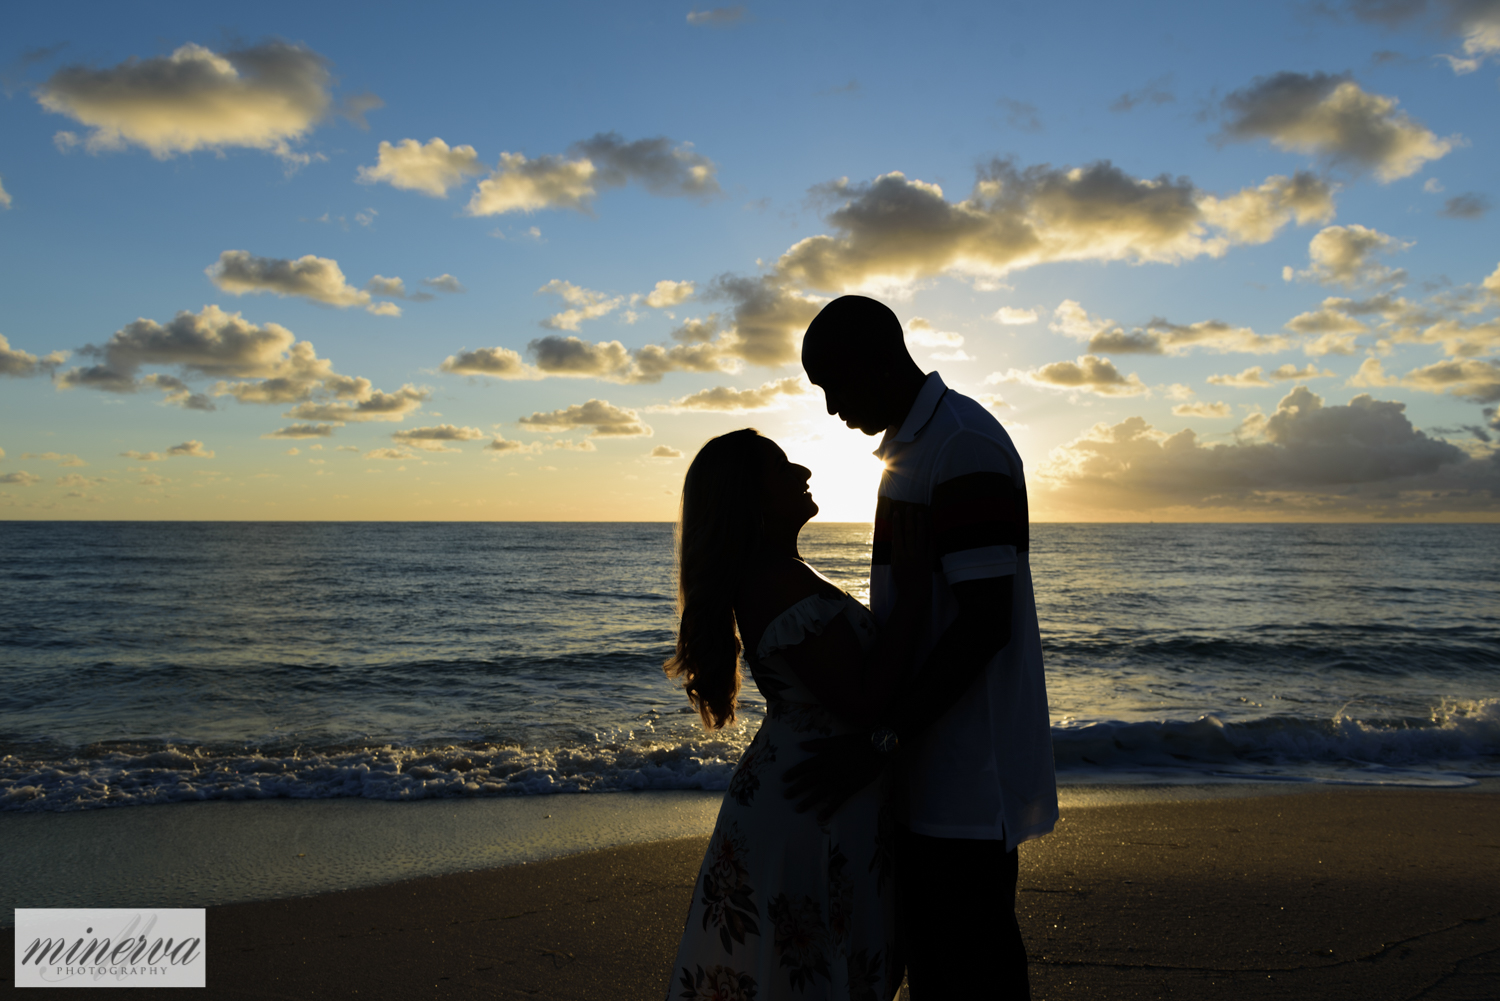 001_engagement-portrait-beach_wedding-photography_worth-ave-clocktower_west-palm-beach_south-florida_orlando_photographer